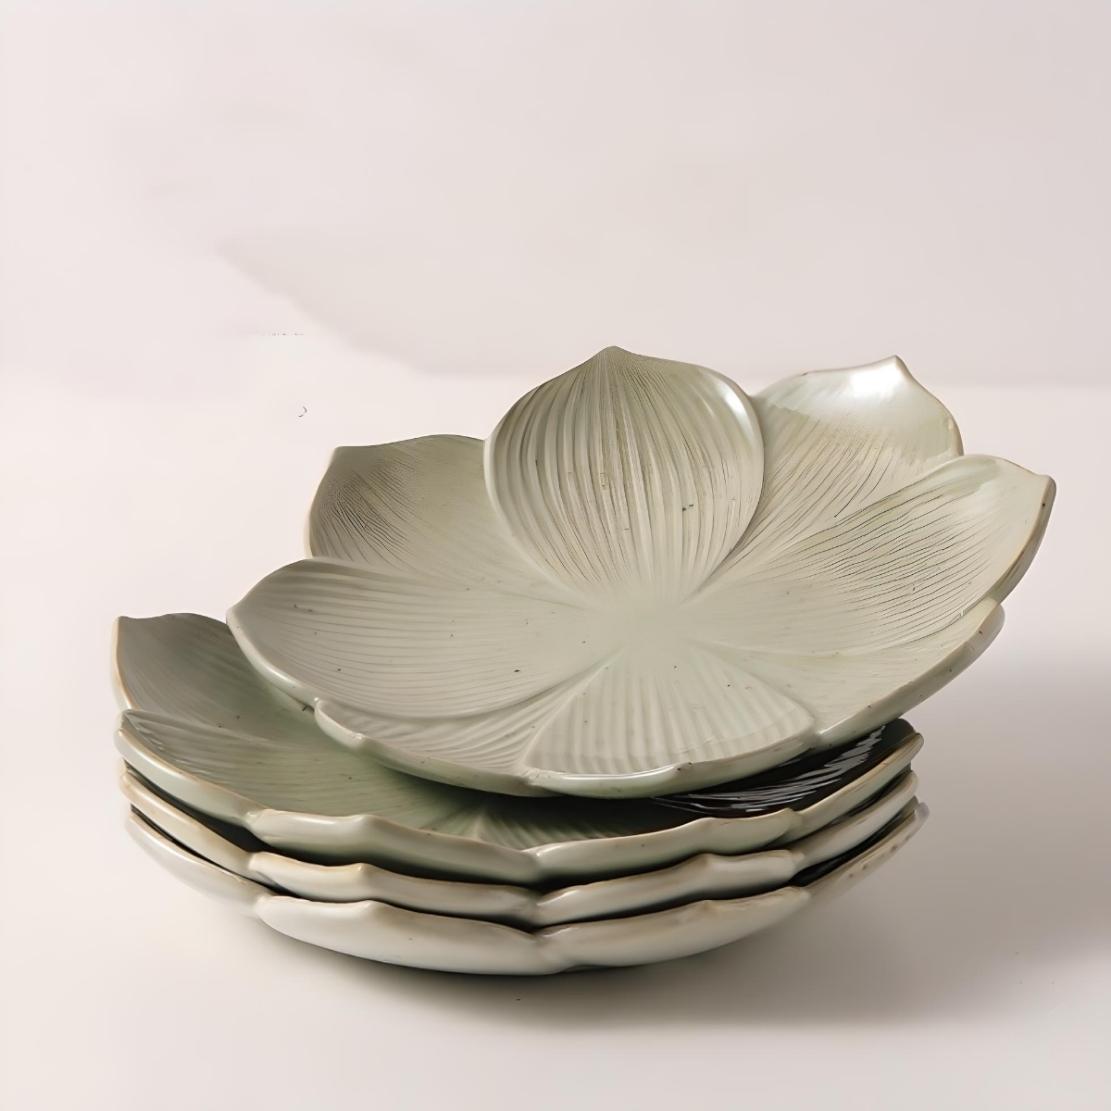 Tiny, green, lotus flower ceramic plates